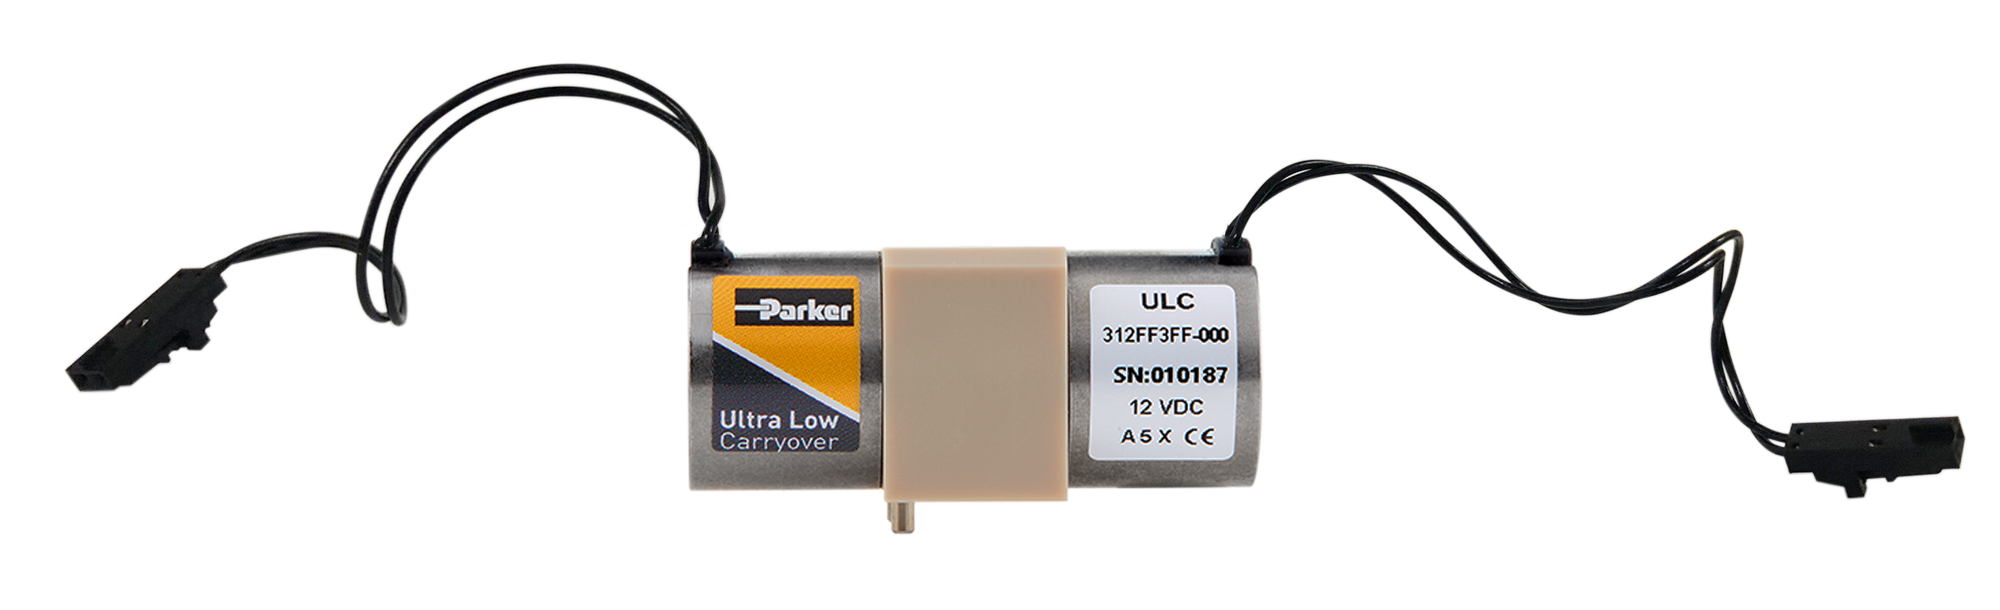 Parker Precision Fluidics Ultra Low Carryover Valve